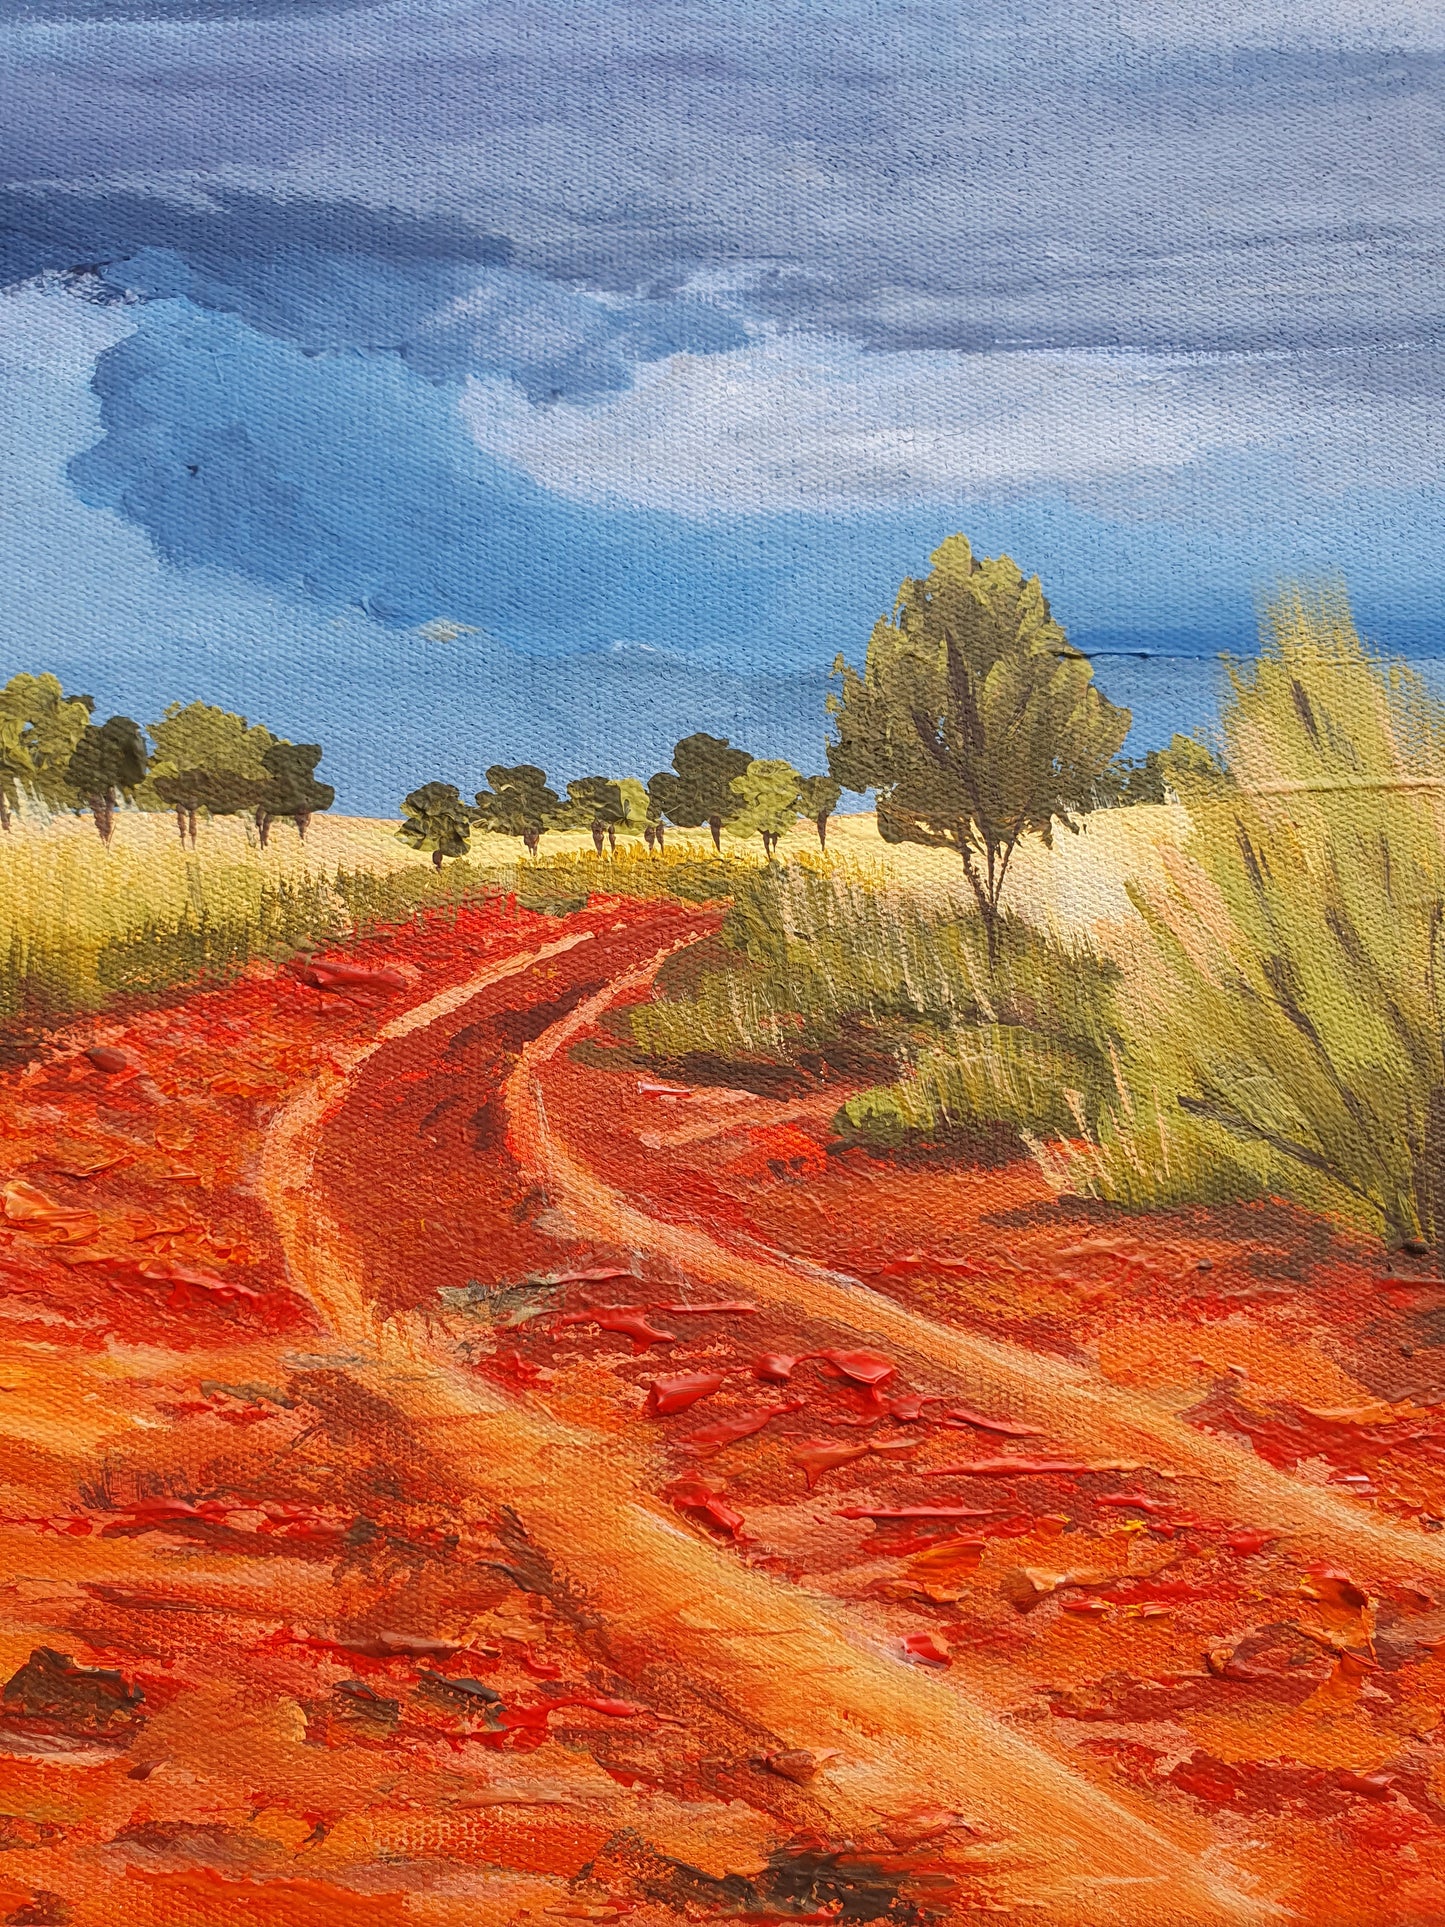 'Red Dirt Road' cotton rag paper print